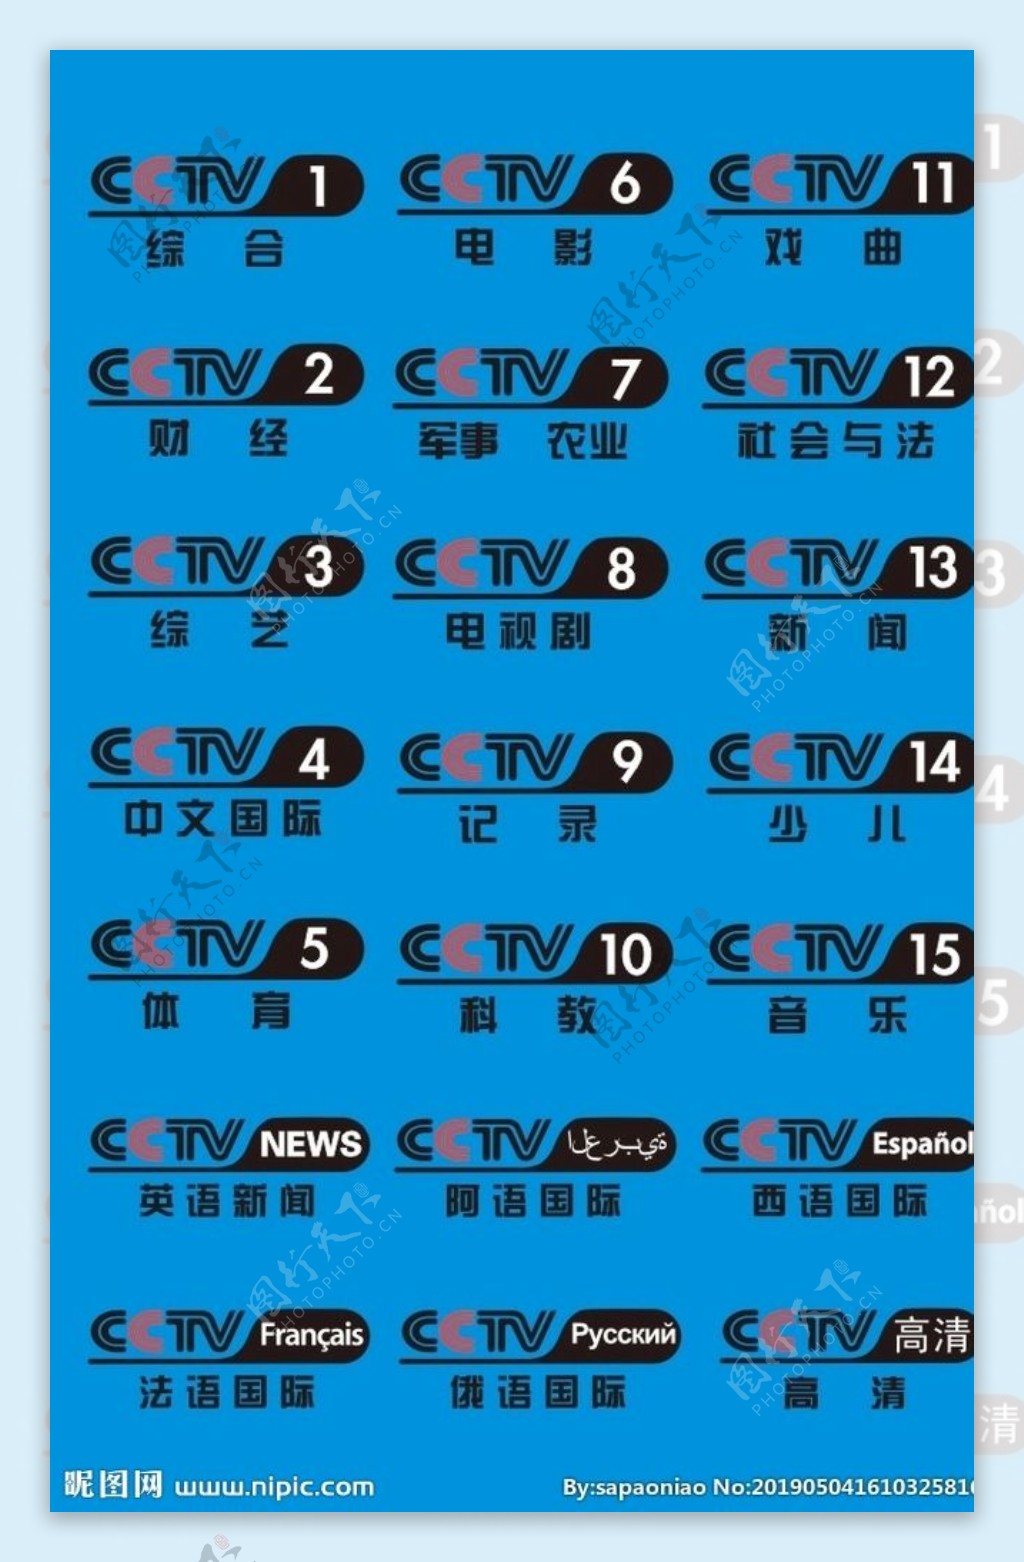 CCTV中央电视台logo